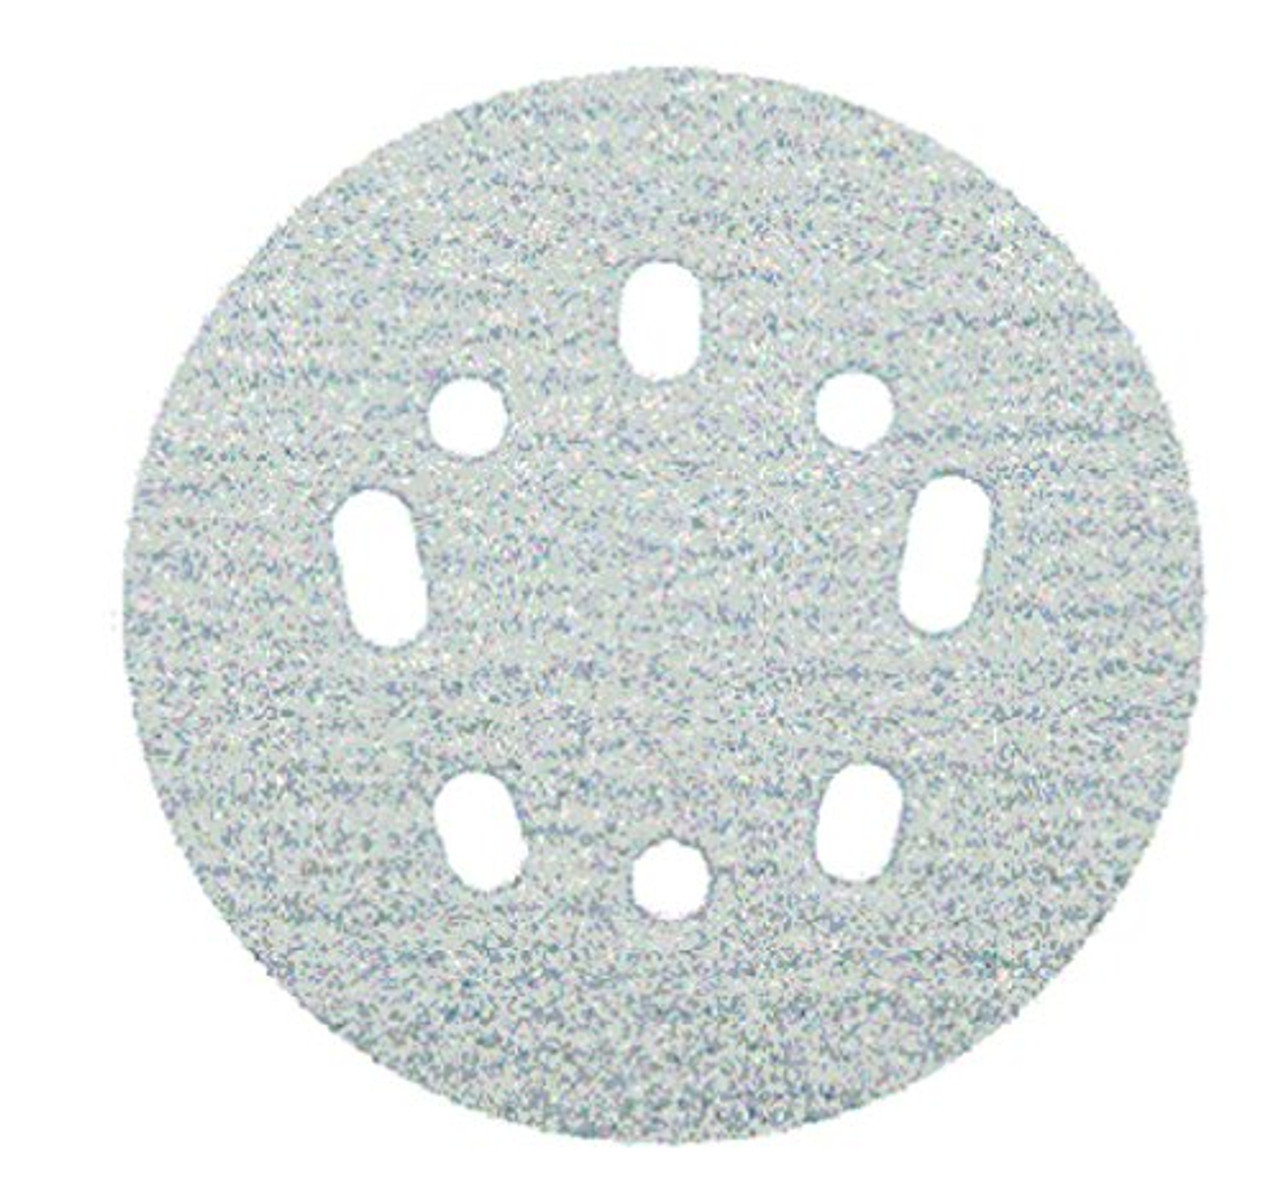 NORTON (68353) 5" Hook & Sand Smoothing Disc, 100 Grit Medium, 1-Pack/3-Discs